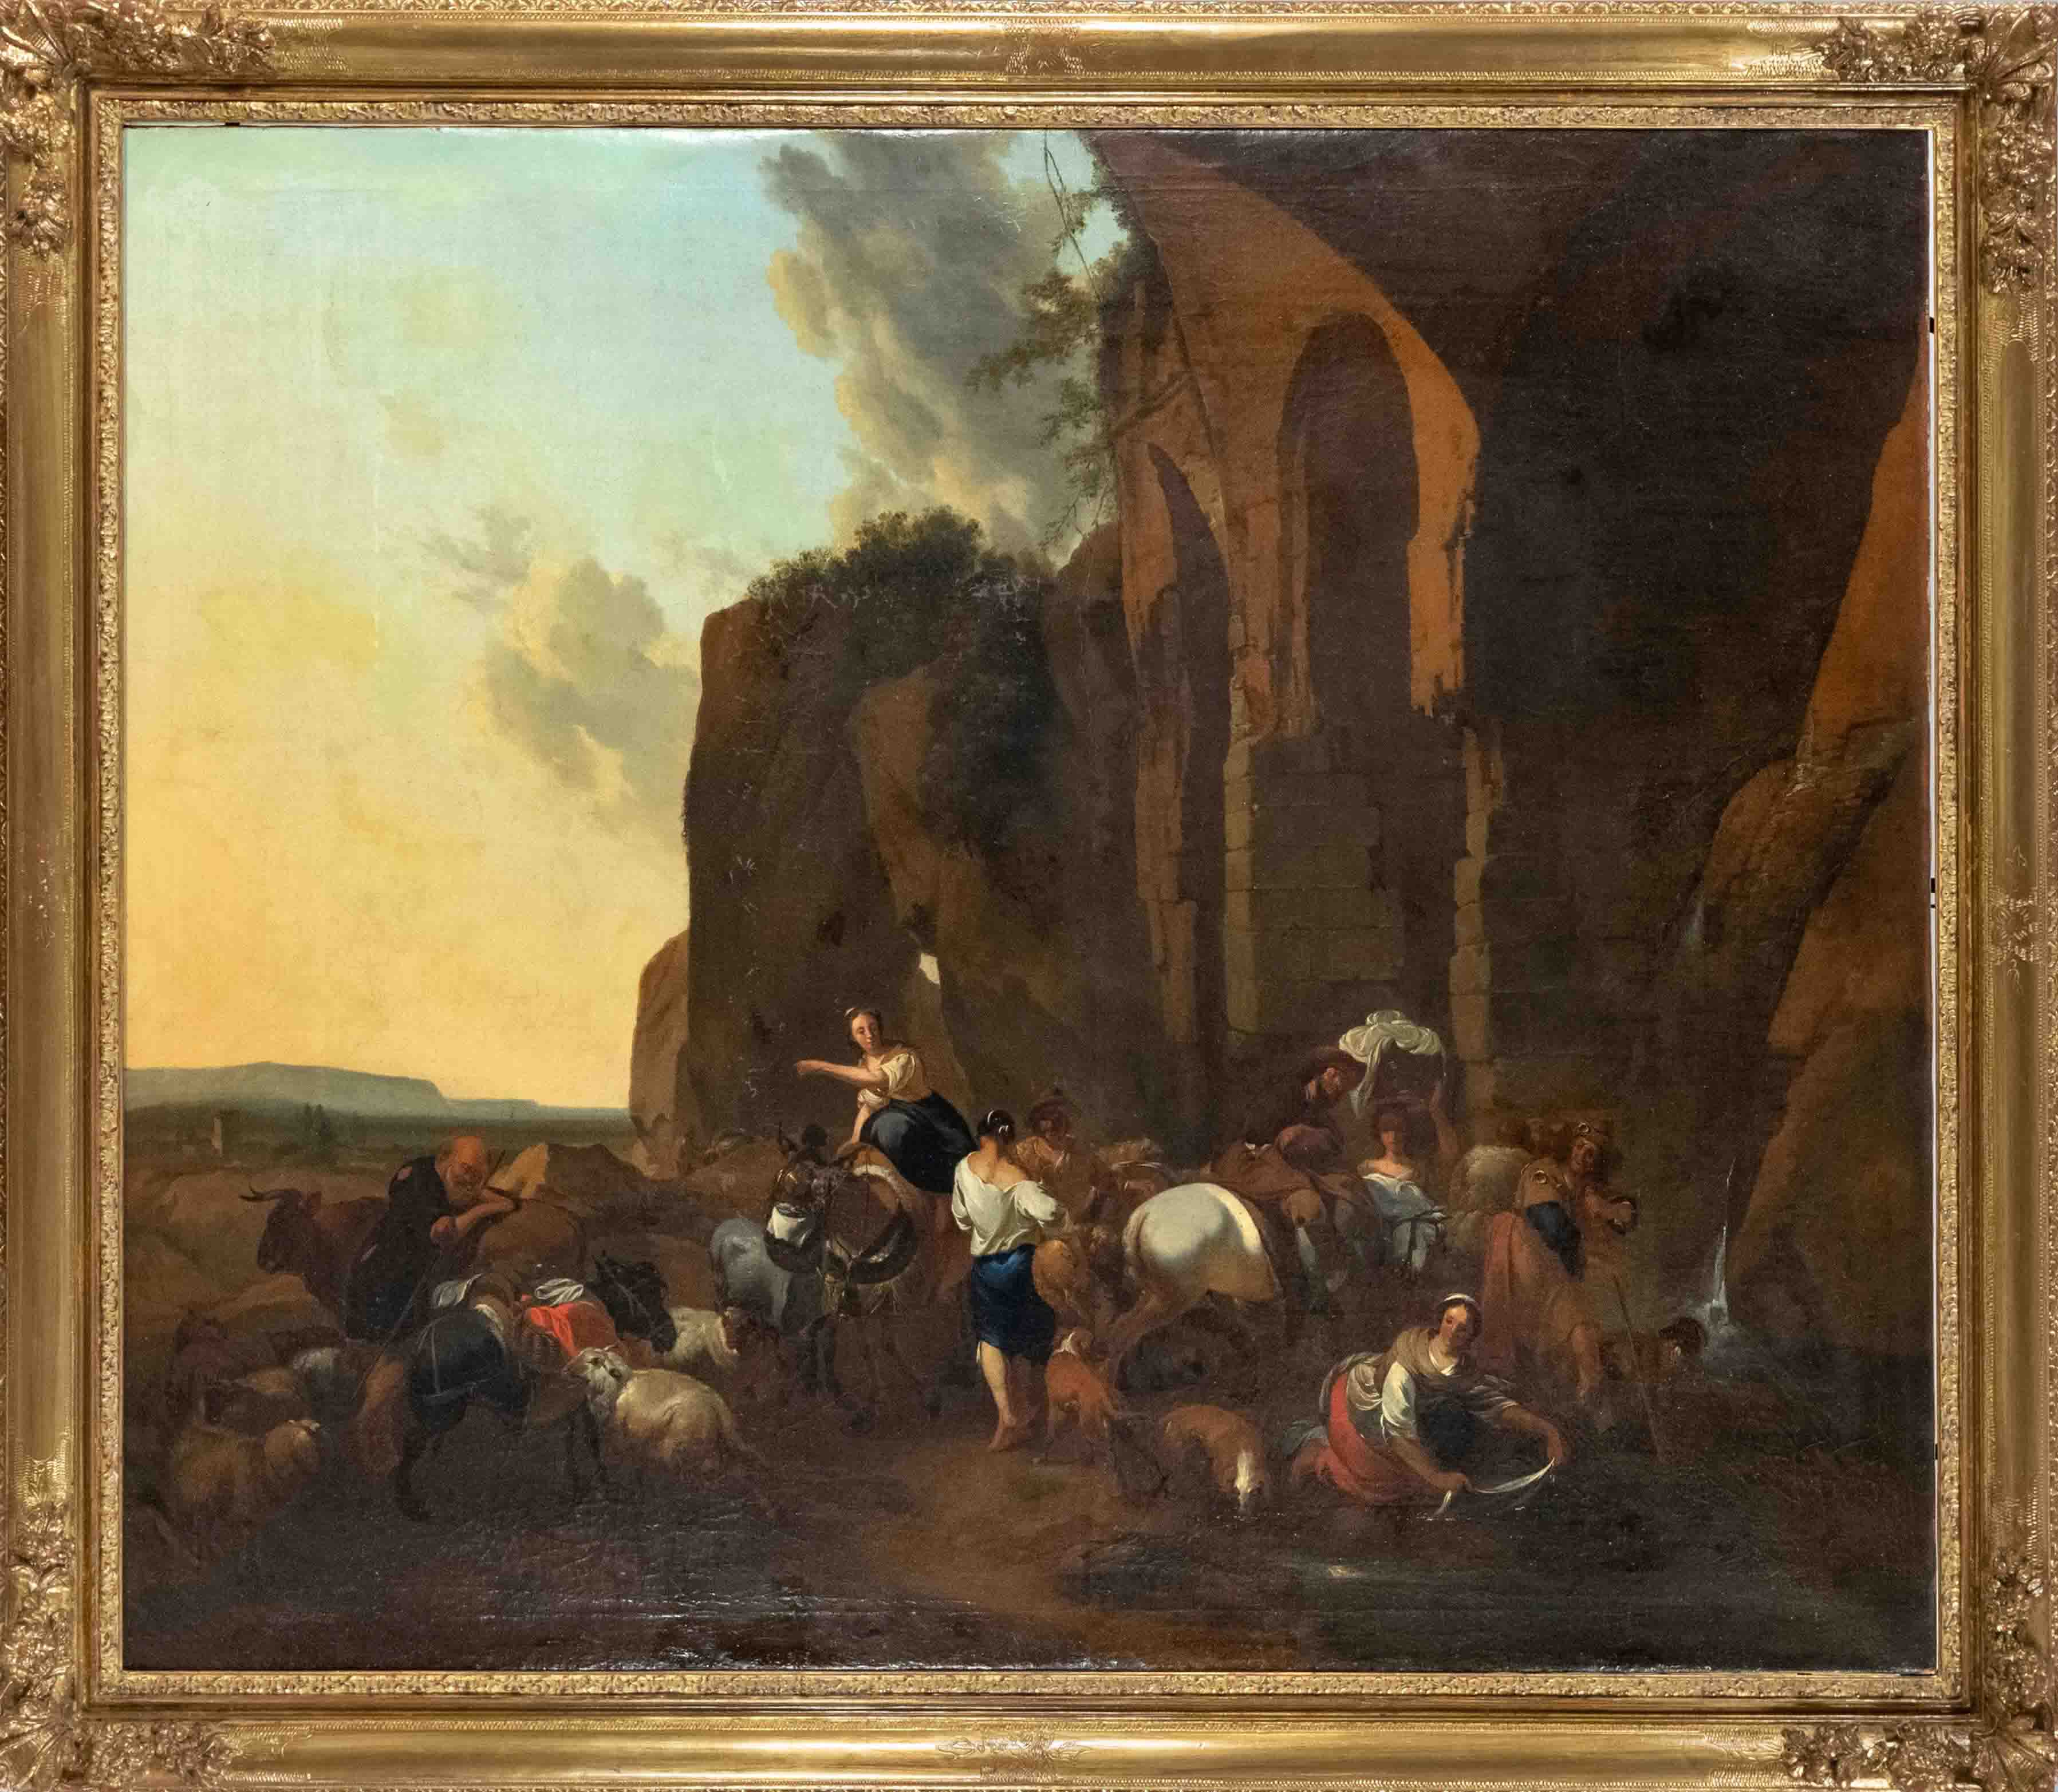 Heinrich Daniel Theodor Spangenberg (1764-1806), painter born in Jena, pupil of Johann Heinrich